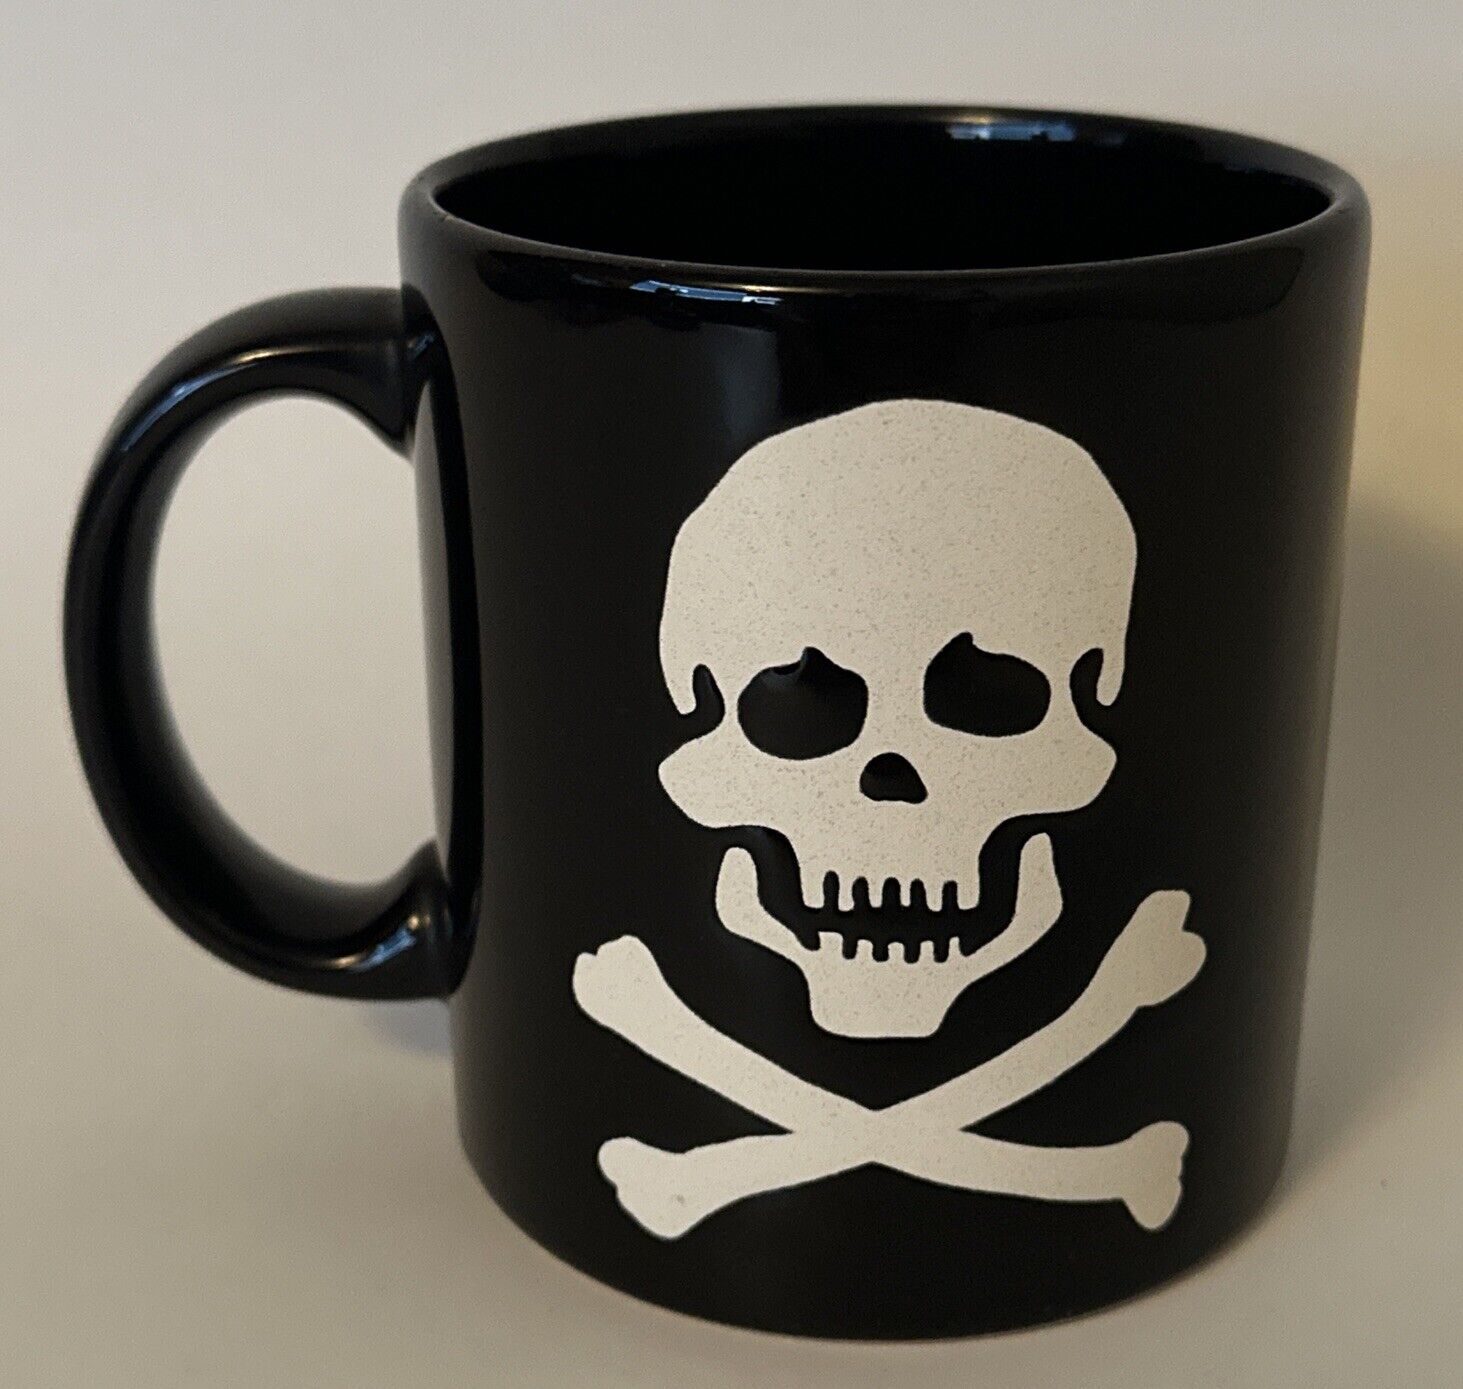 Vintage Waechtersbach Germany 10-Ounce Ceramic Coffee Mug Black Skull & Bones